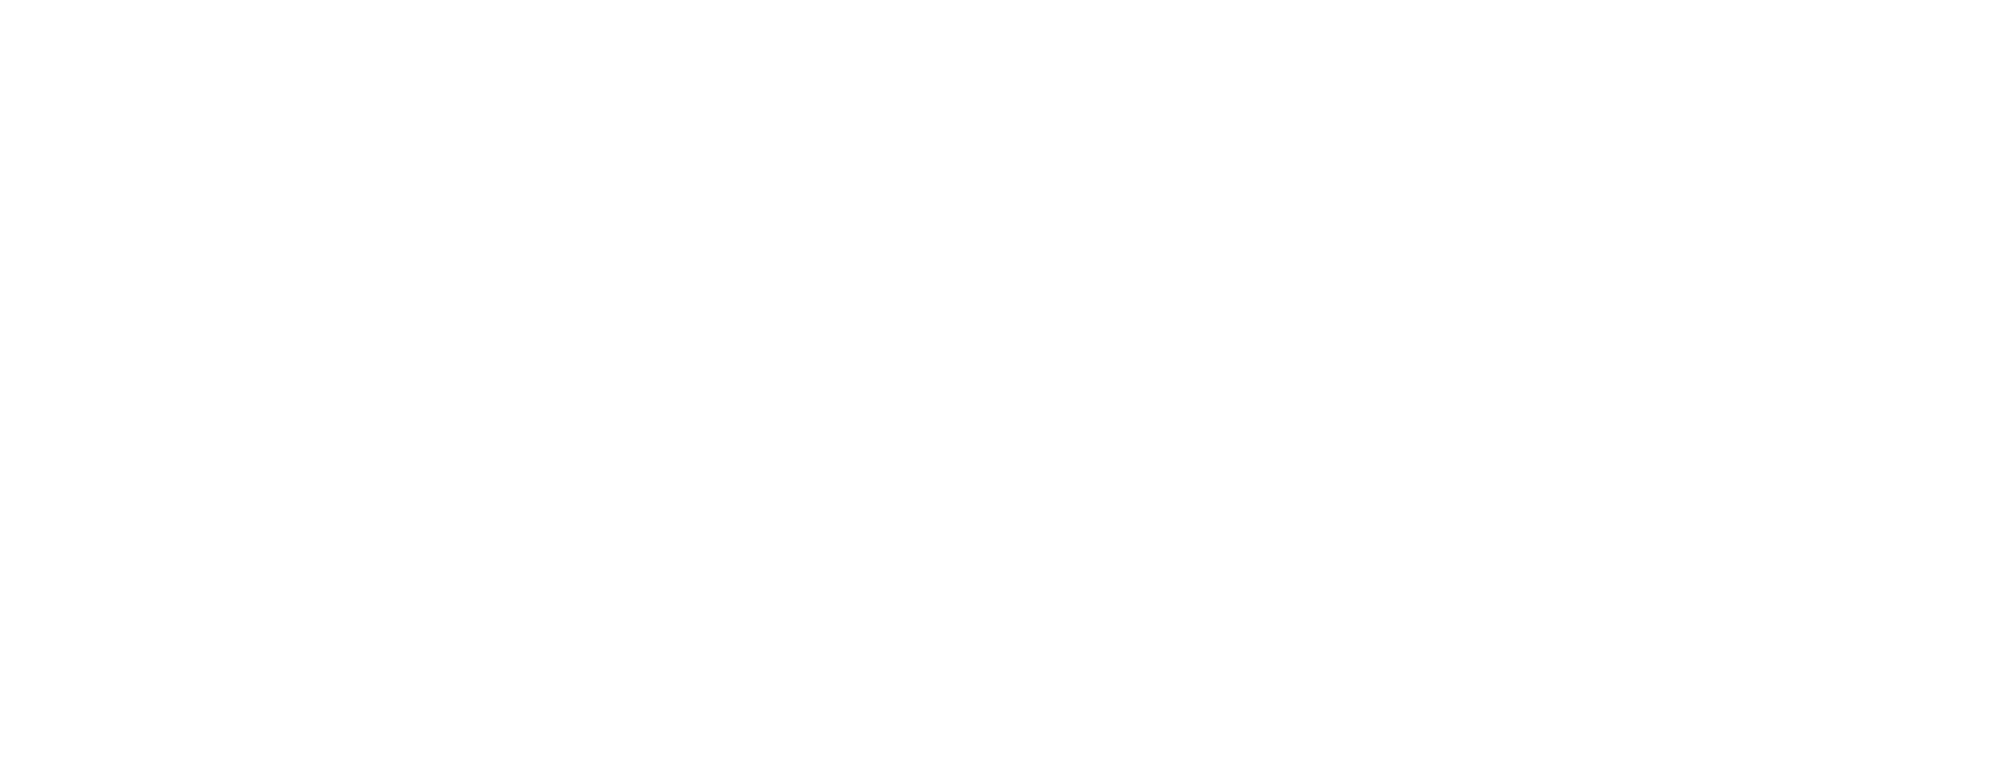 logo aerobanana